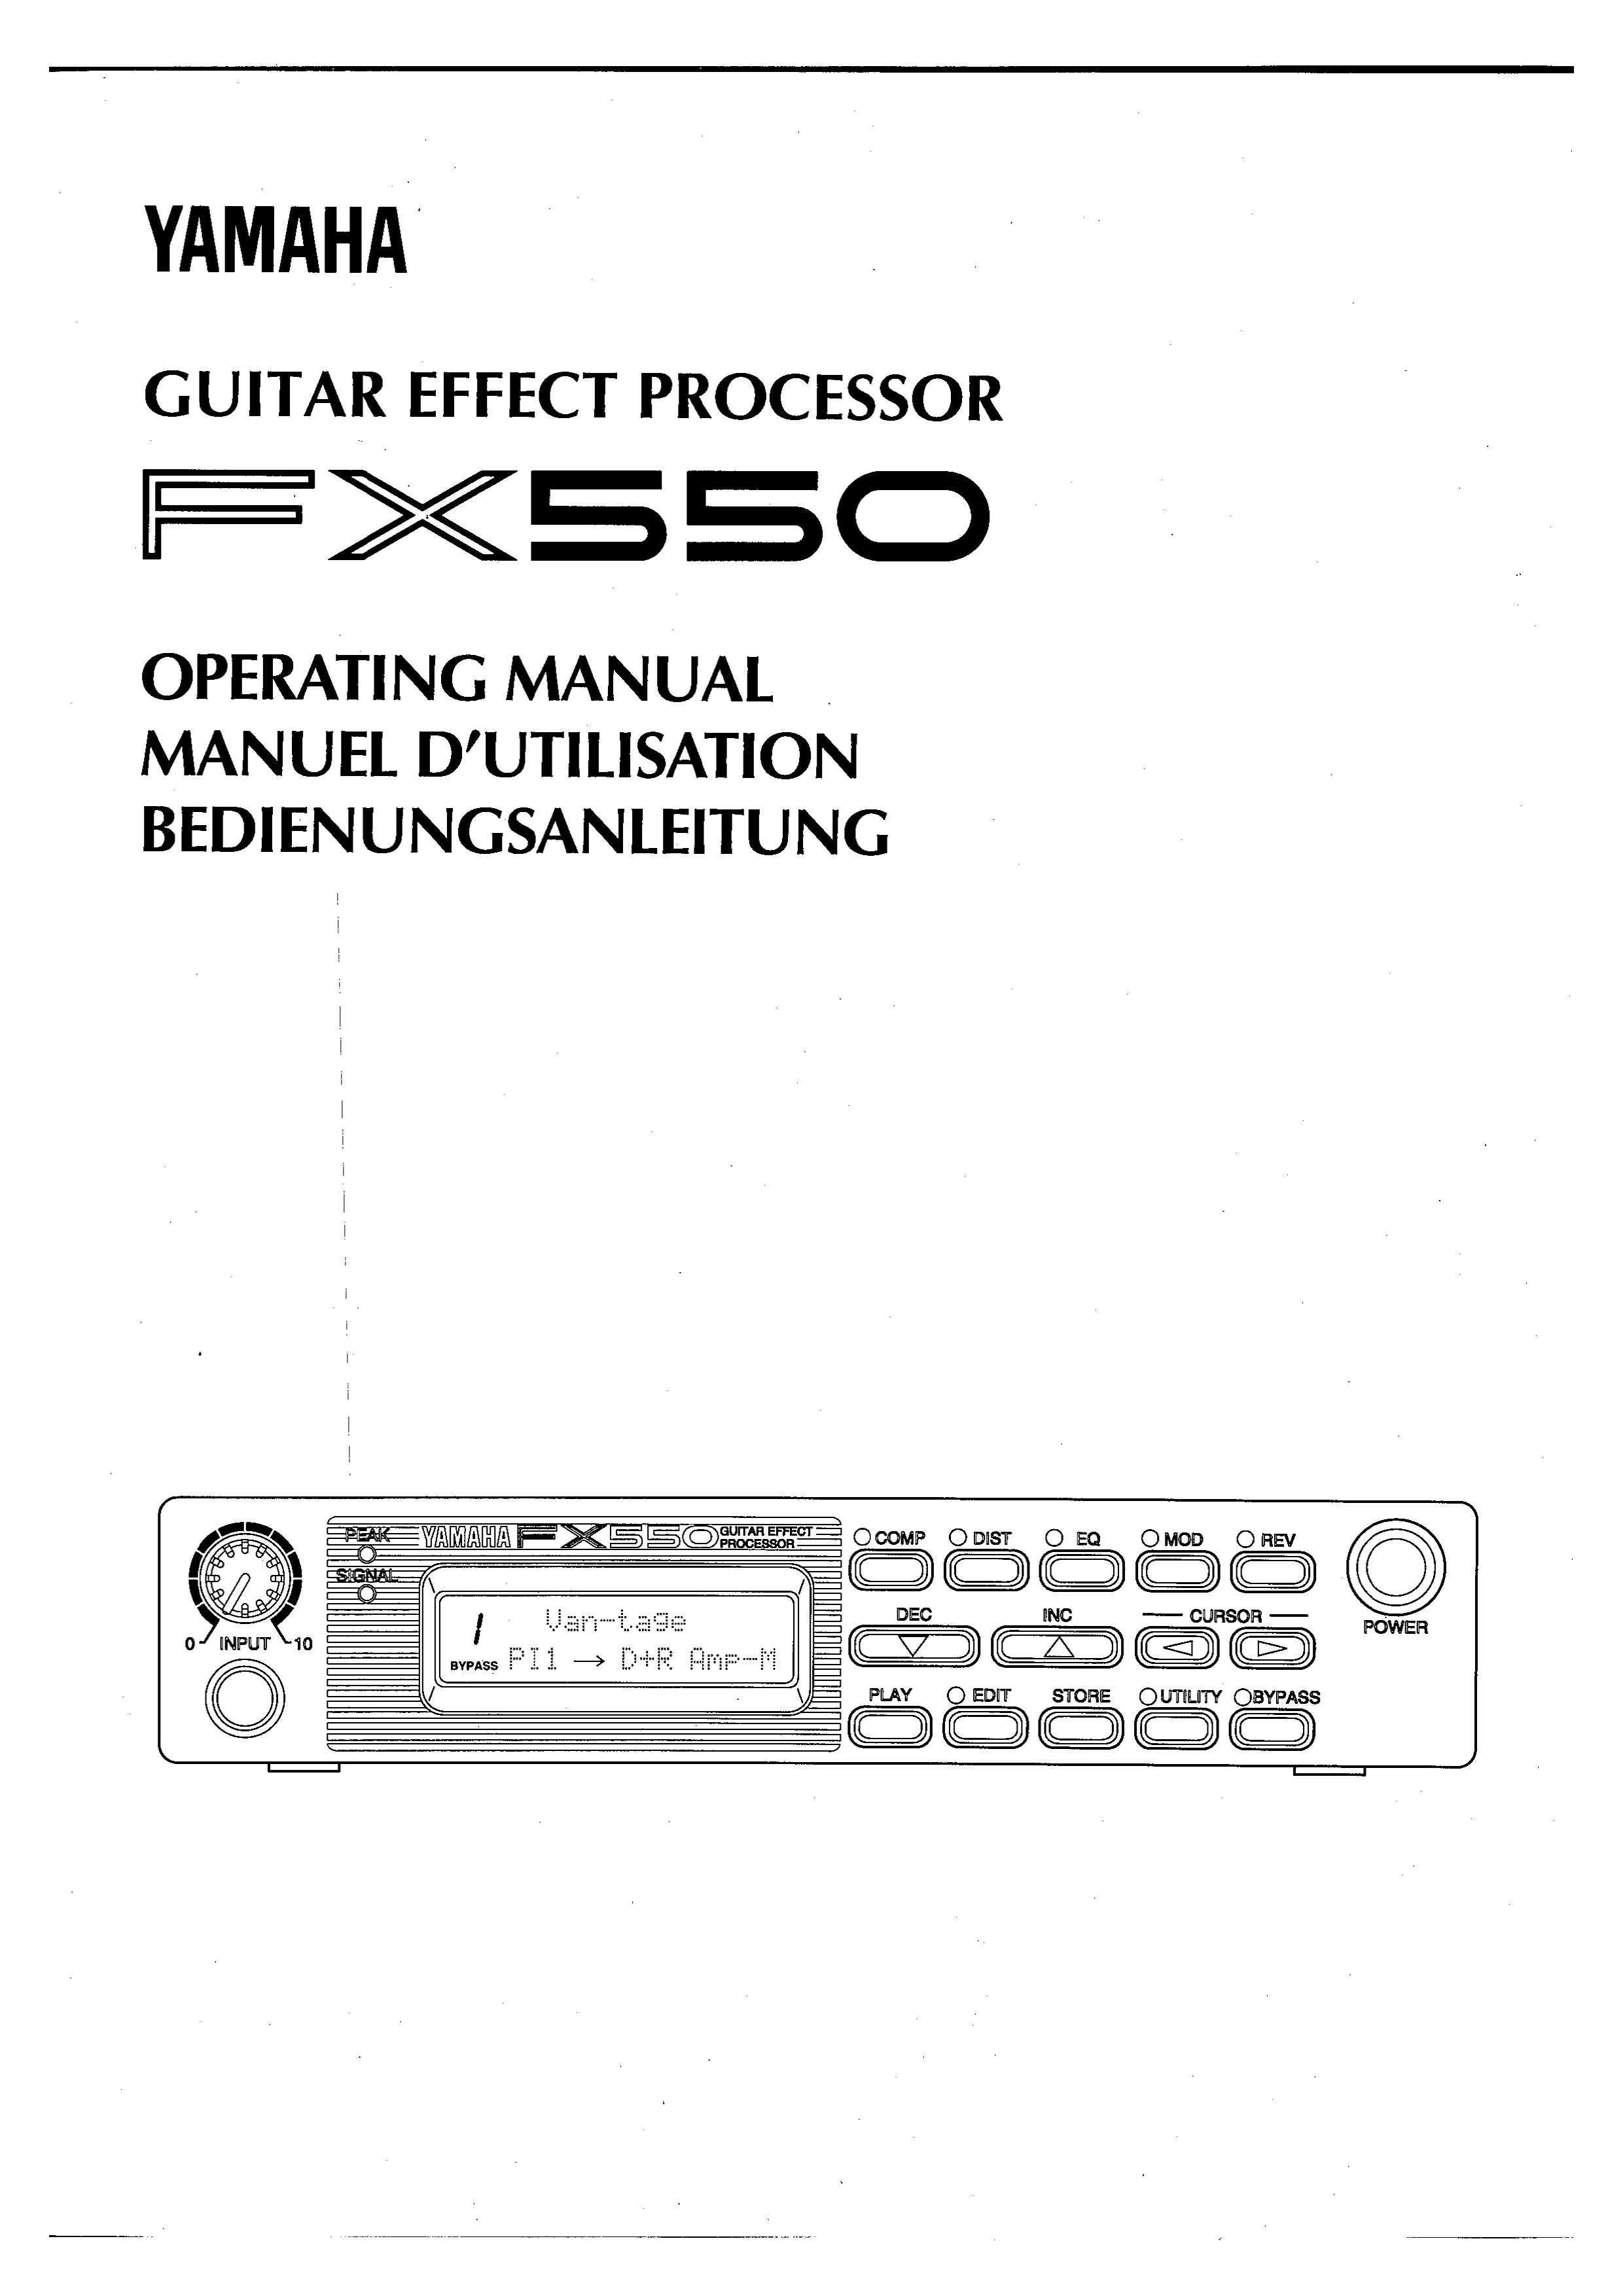 Yamaha FX550 DJ Equipment User Manual